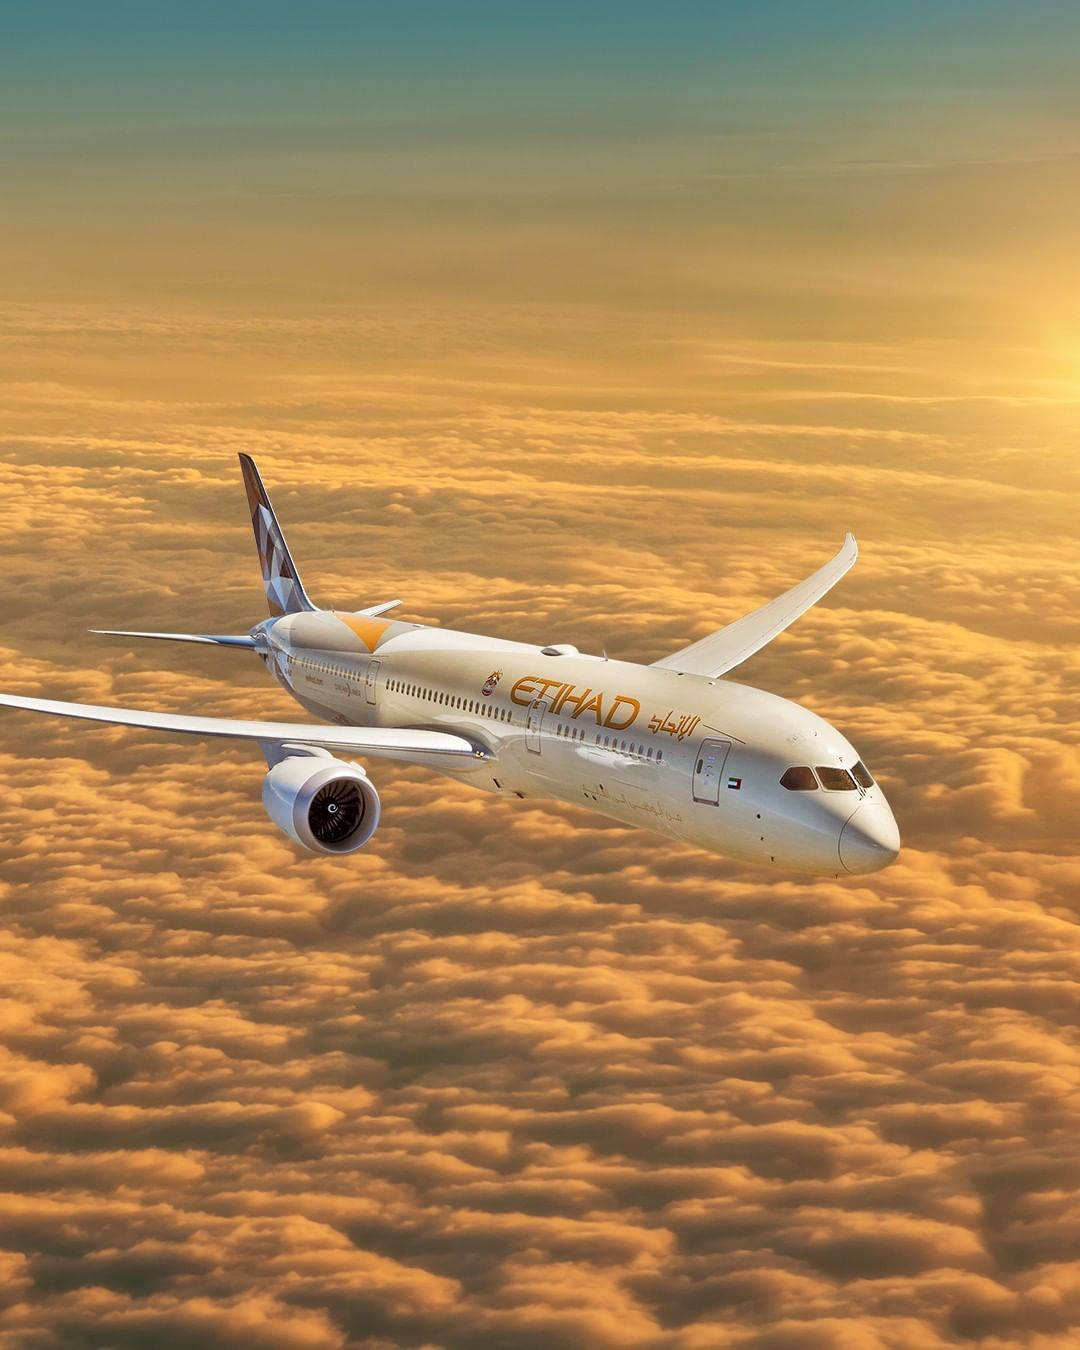 Sunset Voyage with Etihad Airways Wallpaper